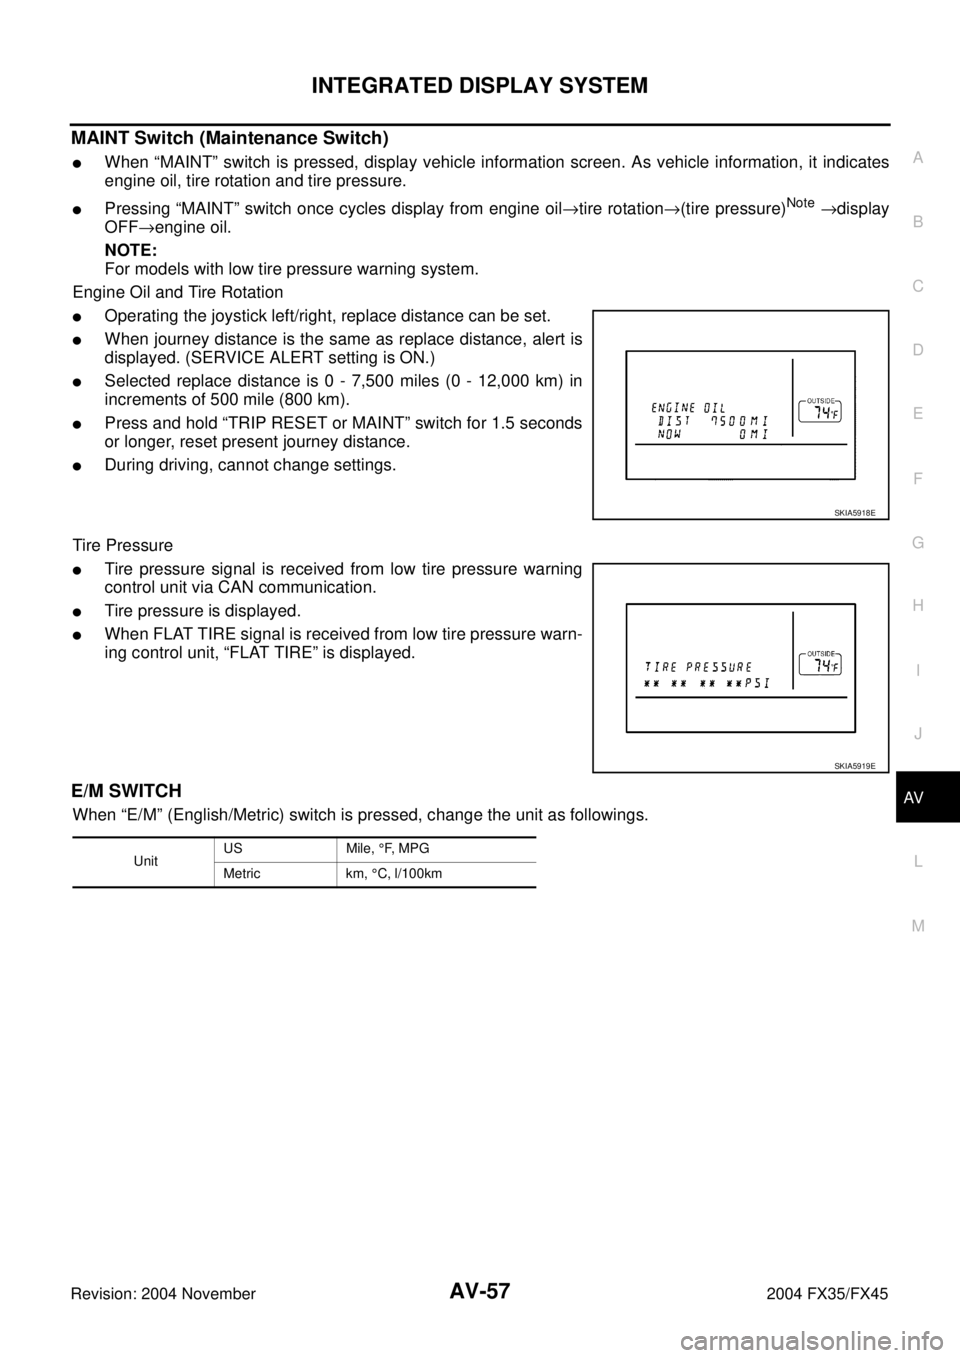 INFINITI FX35 2004  Service Manual INTEGRATED DISPLAY SYSTEM
AV-57
C
D
E
F
G
H
I
J
L
MA
B
AV
Revision: 2004 November 2004 FX35/FX45
MAINT Switch (Maintenance Switch)
When “MAINT” switch is pressed, display vehicle information scre